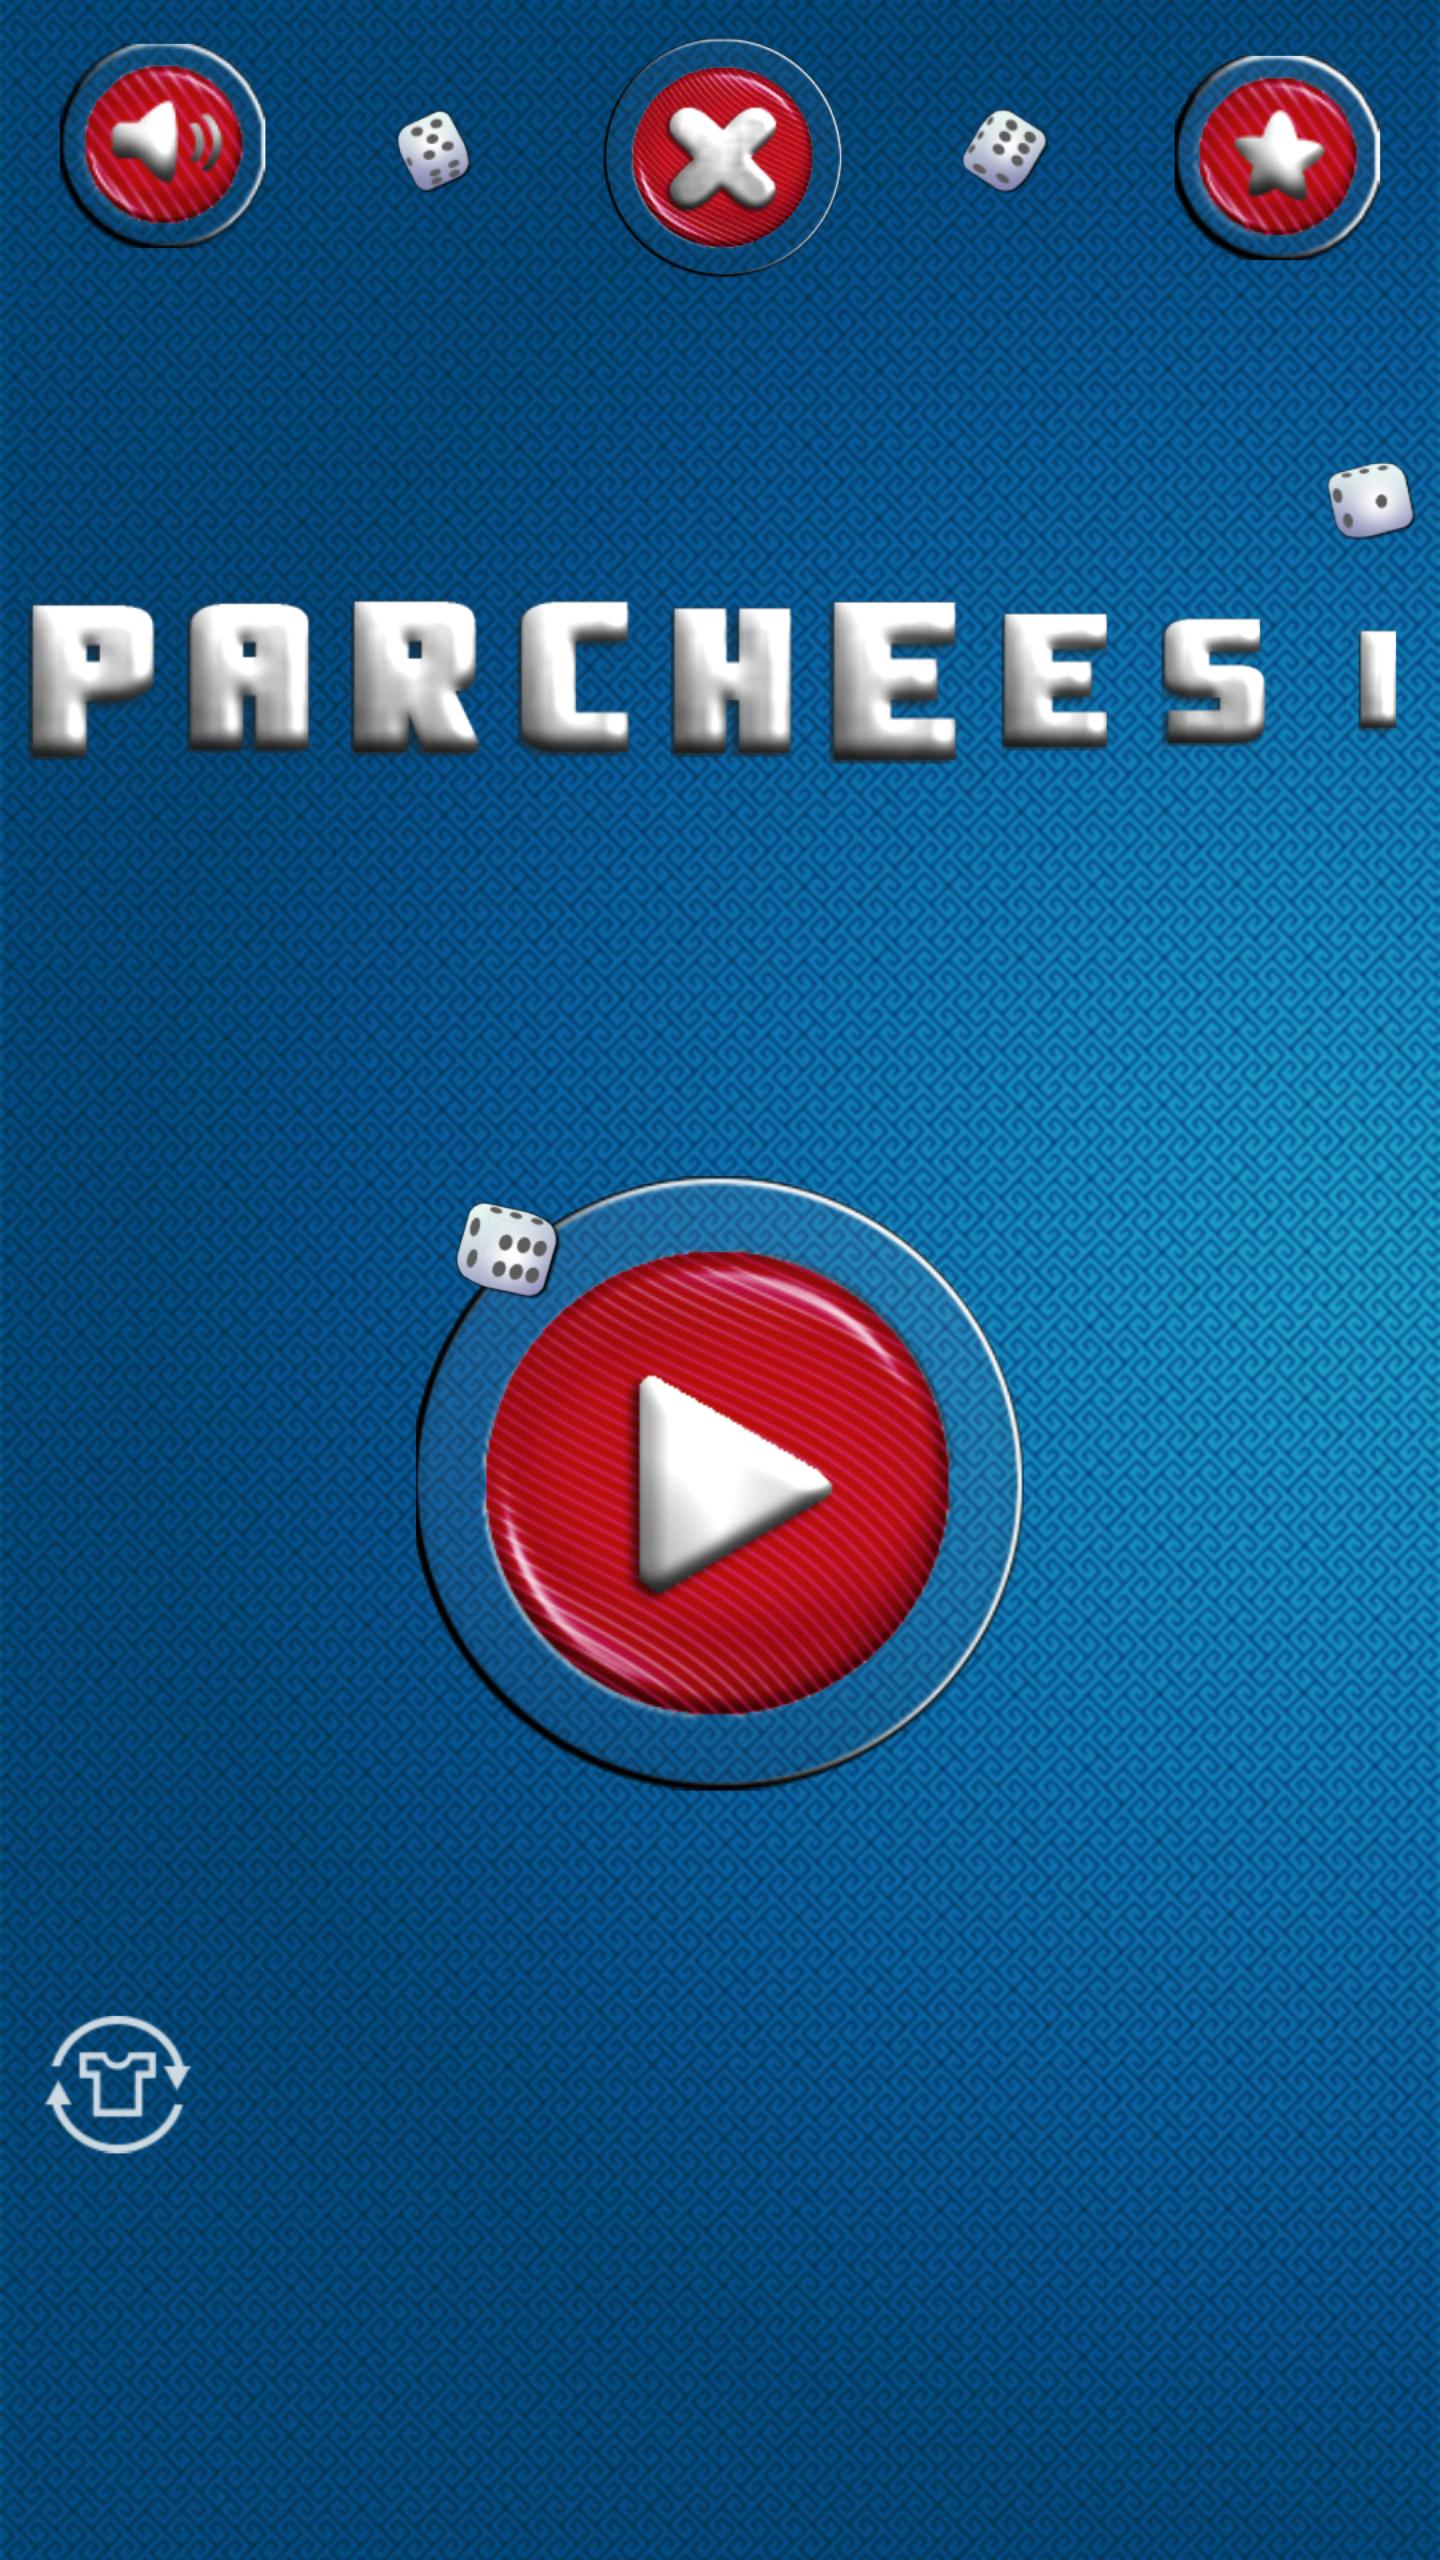 Parcheesi Board Game 2.2 Screenshot 1